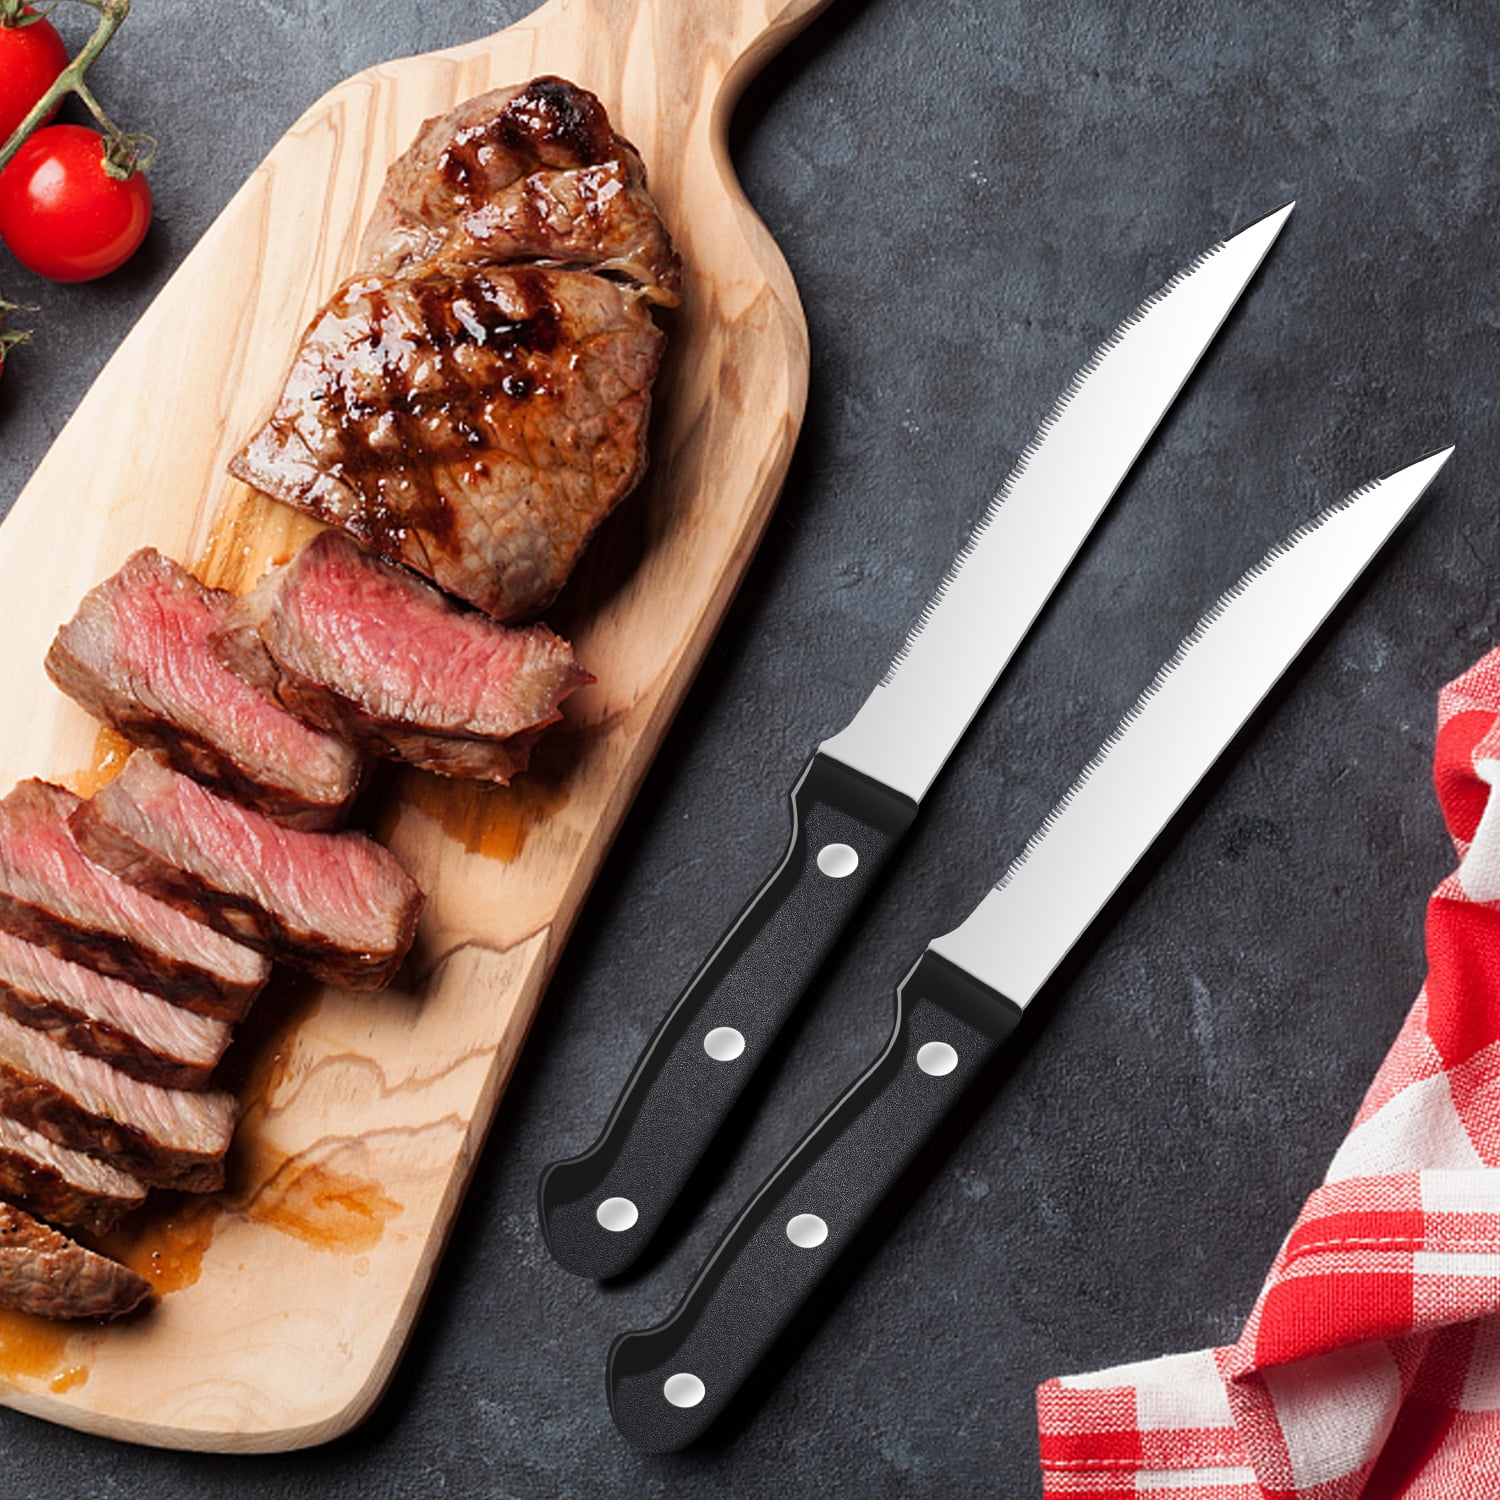 8Piece Silverware Set with Steak Knives for 8, For Home Kitchen Restaurant  Hotel, Kitchen Utensils Set, Mirror Polished - AliExpress